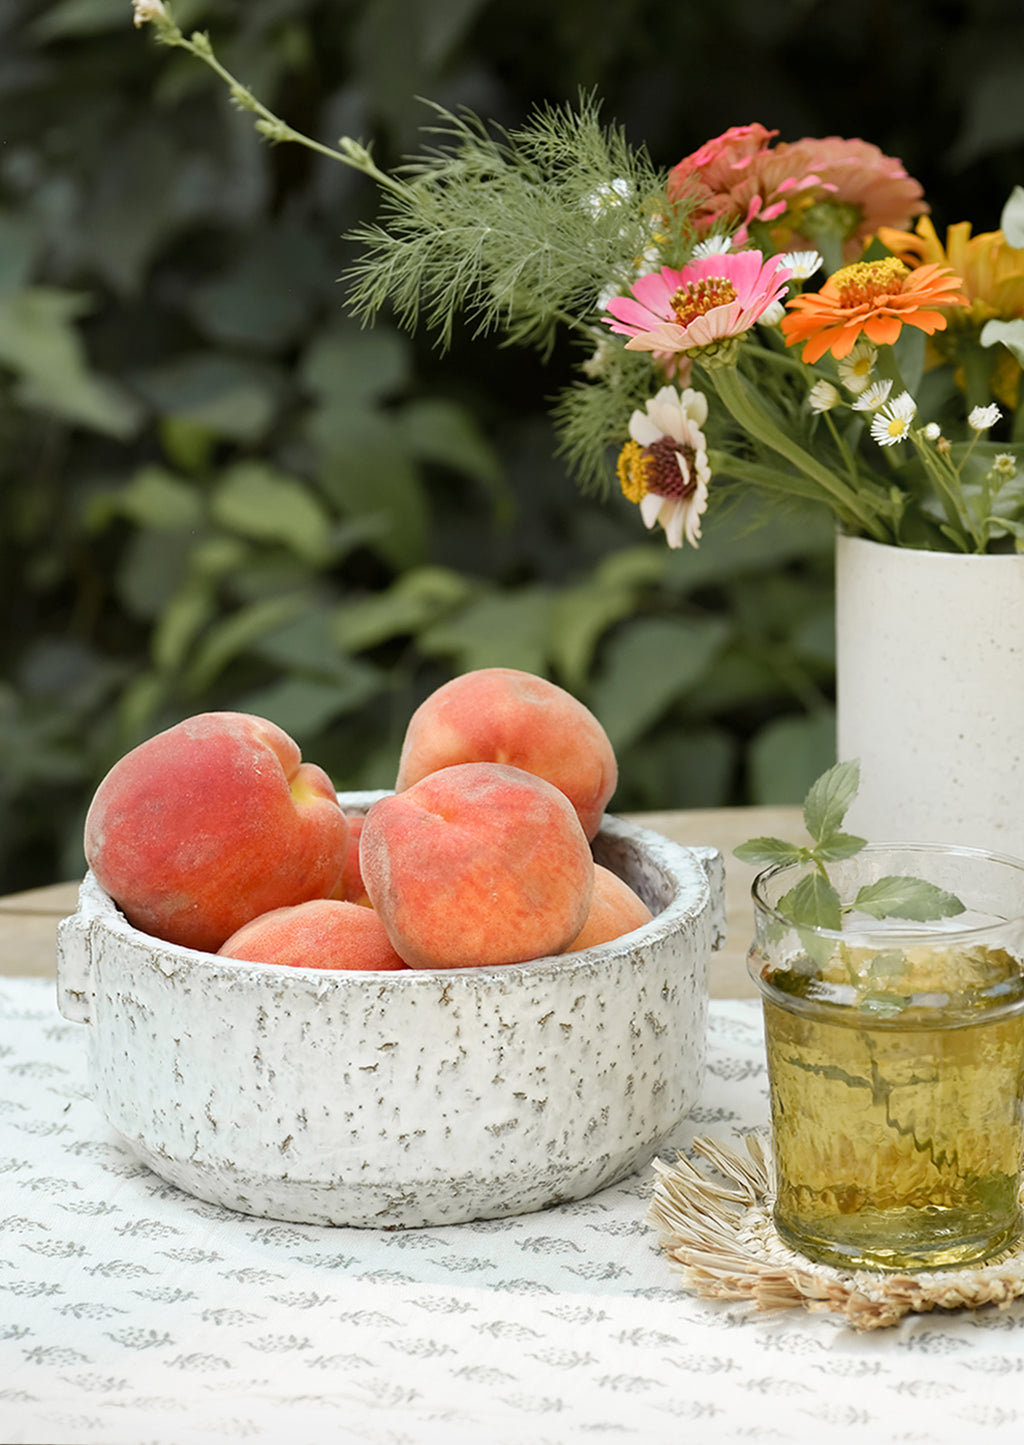 Medium: A textured ceramic bowl on a table, holding peaches.